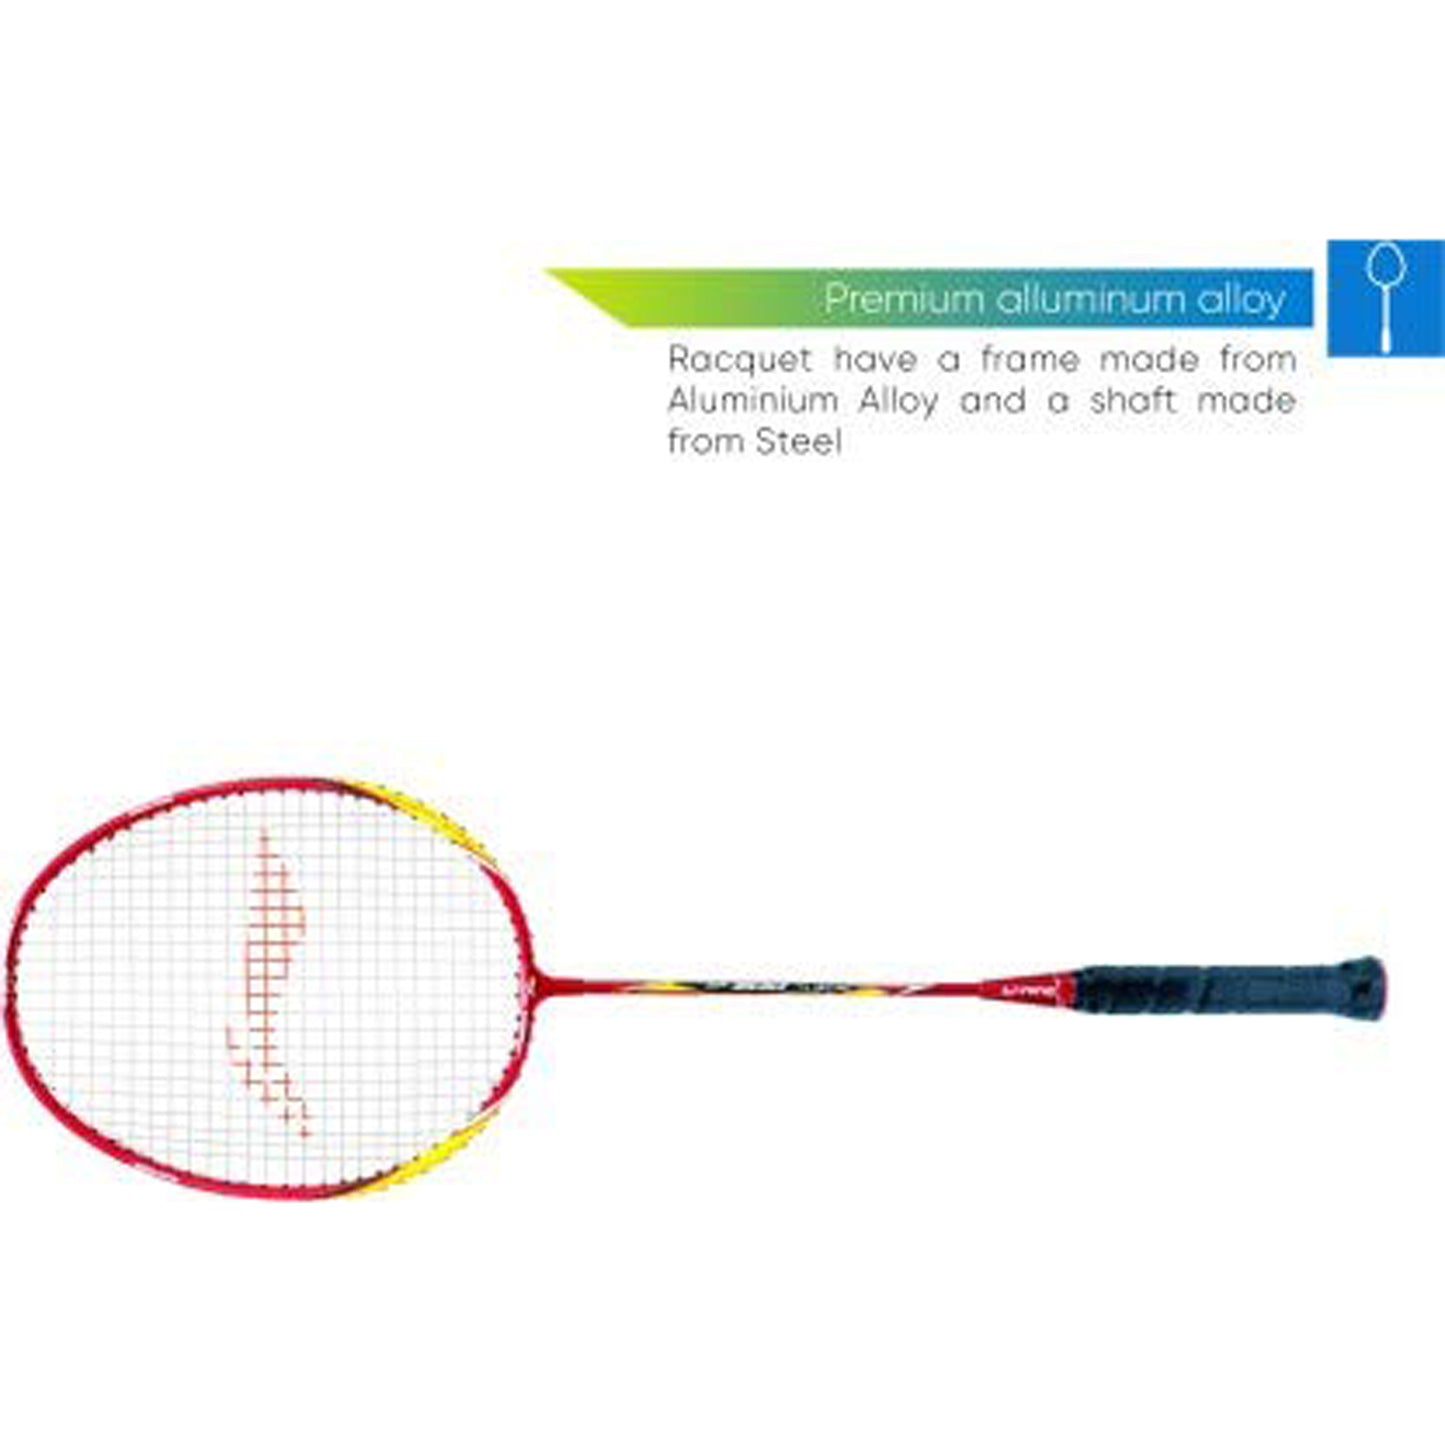 Li-Ning XP 900 PV Sindhu Signature Series Badminton Racquet - Best Price online Prokicksports.com